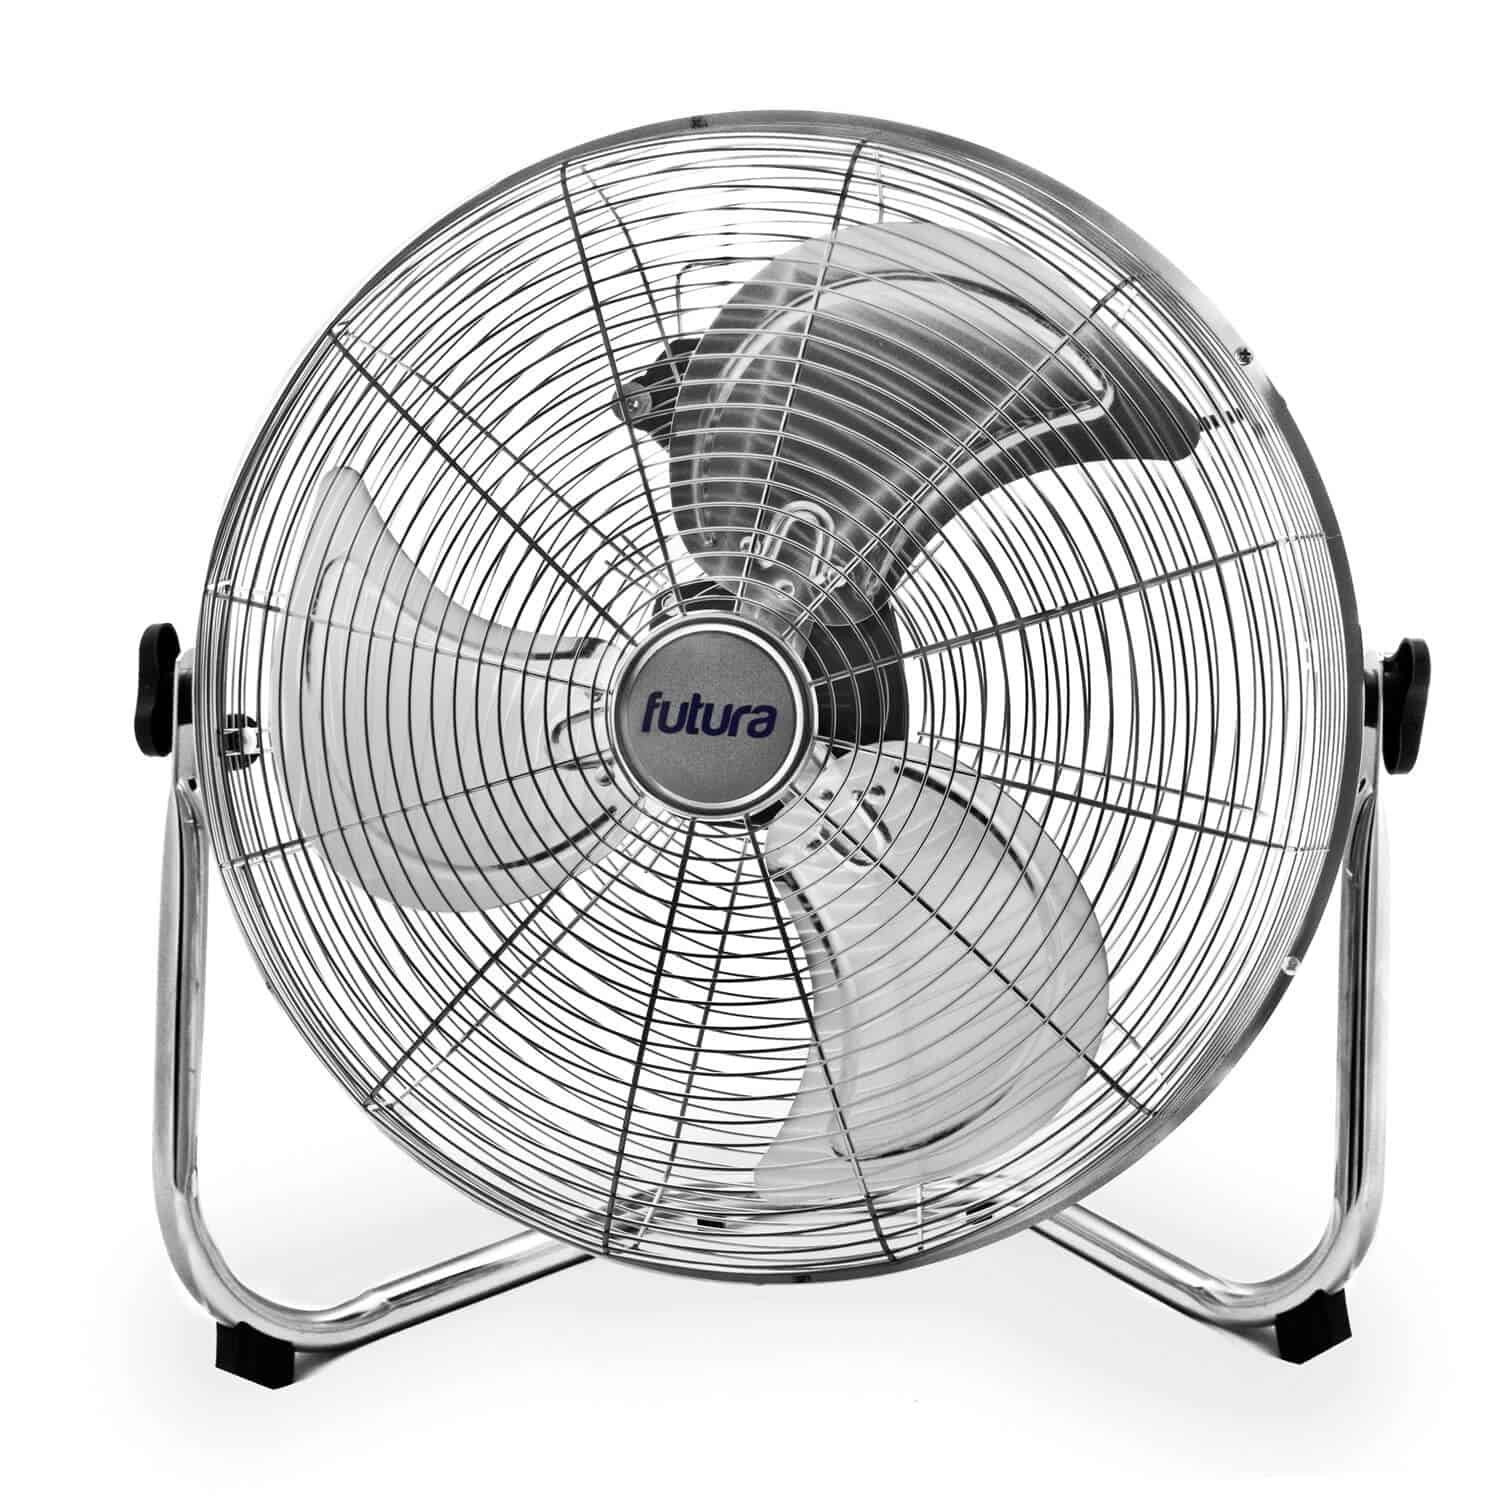 Вентилятор 20 минут. China Industrial Fan 50cm/20" Axial Fan/Portable Fan - China. High Velocity вентиляторы. Вентилятор 20 см. Вентилятор 20*20.